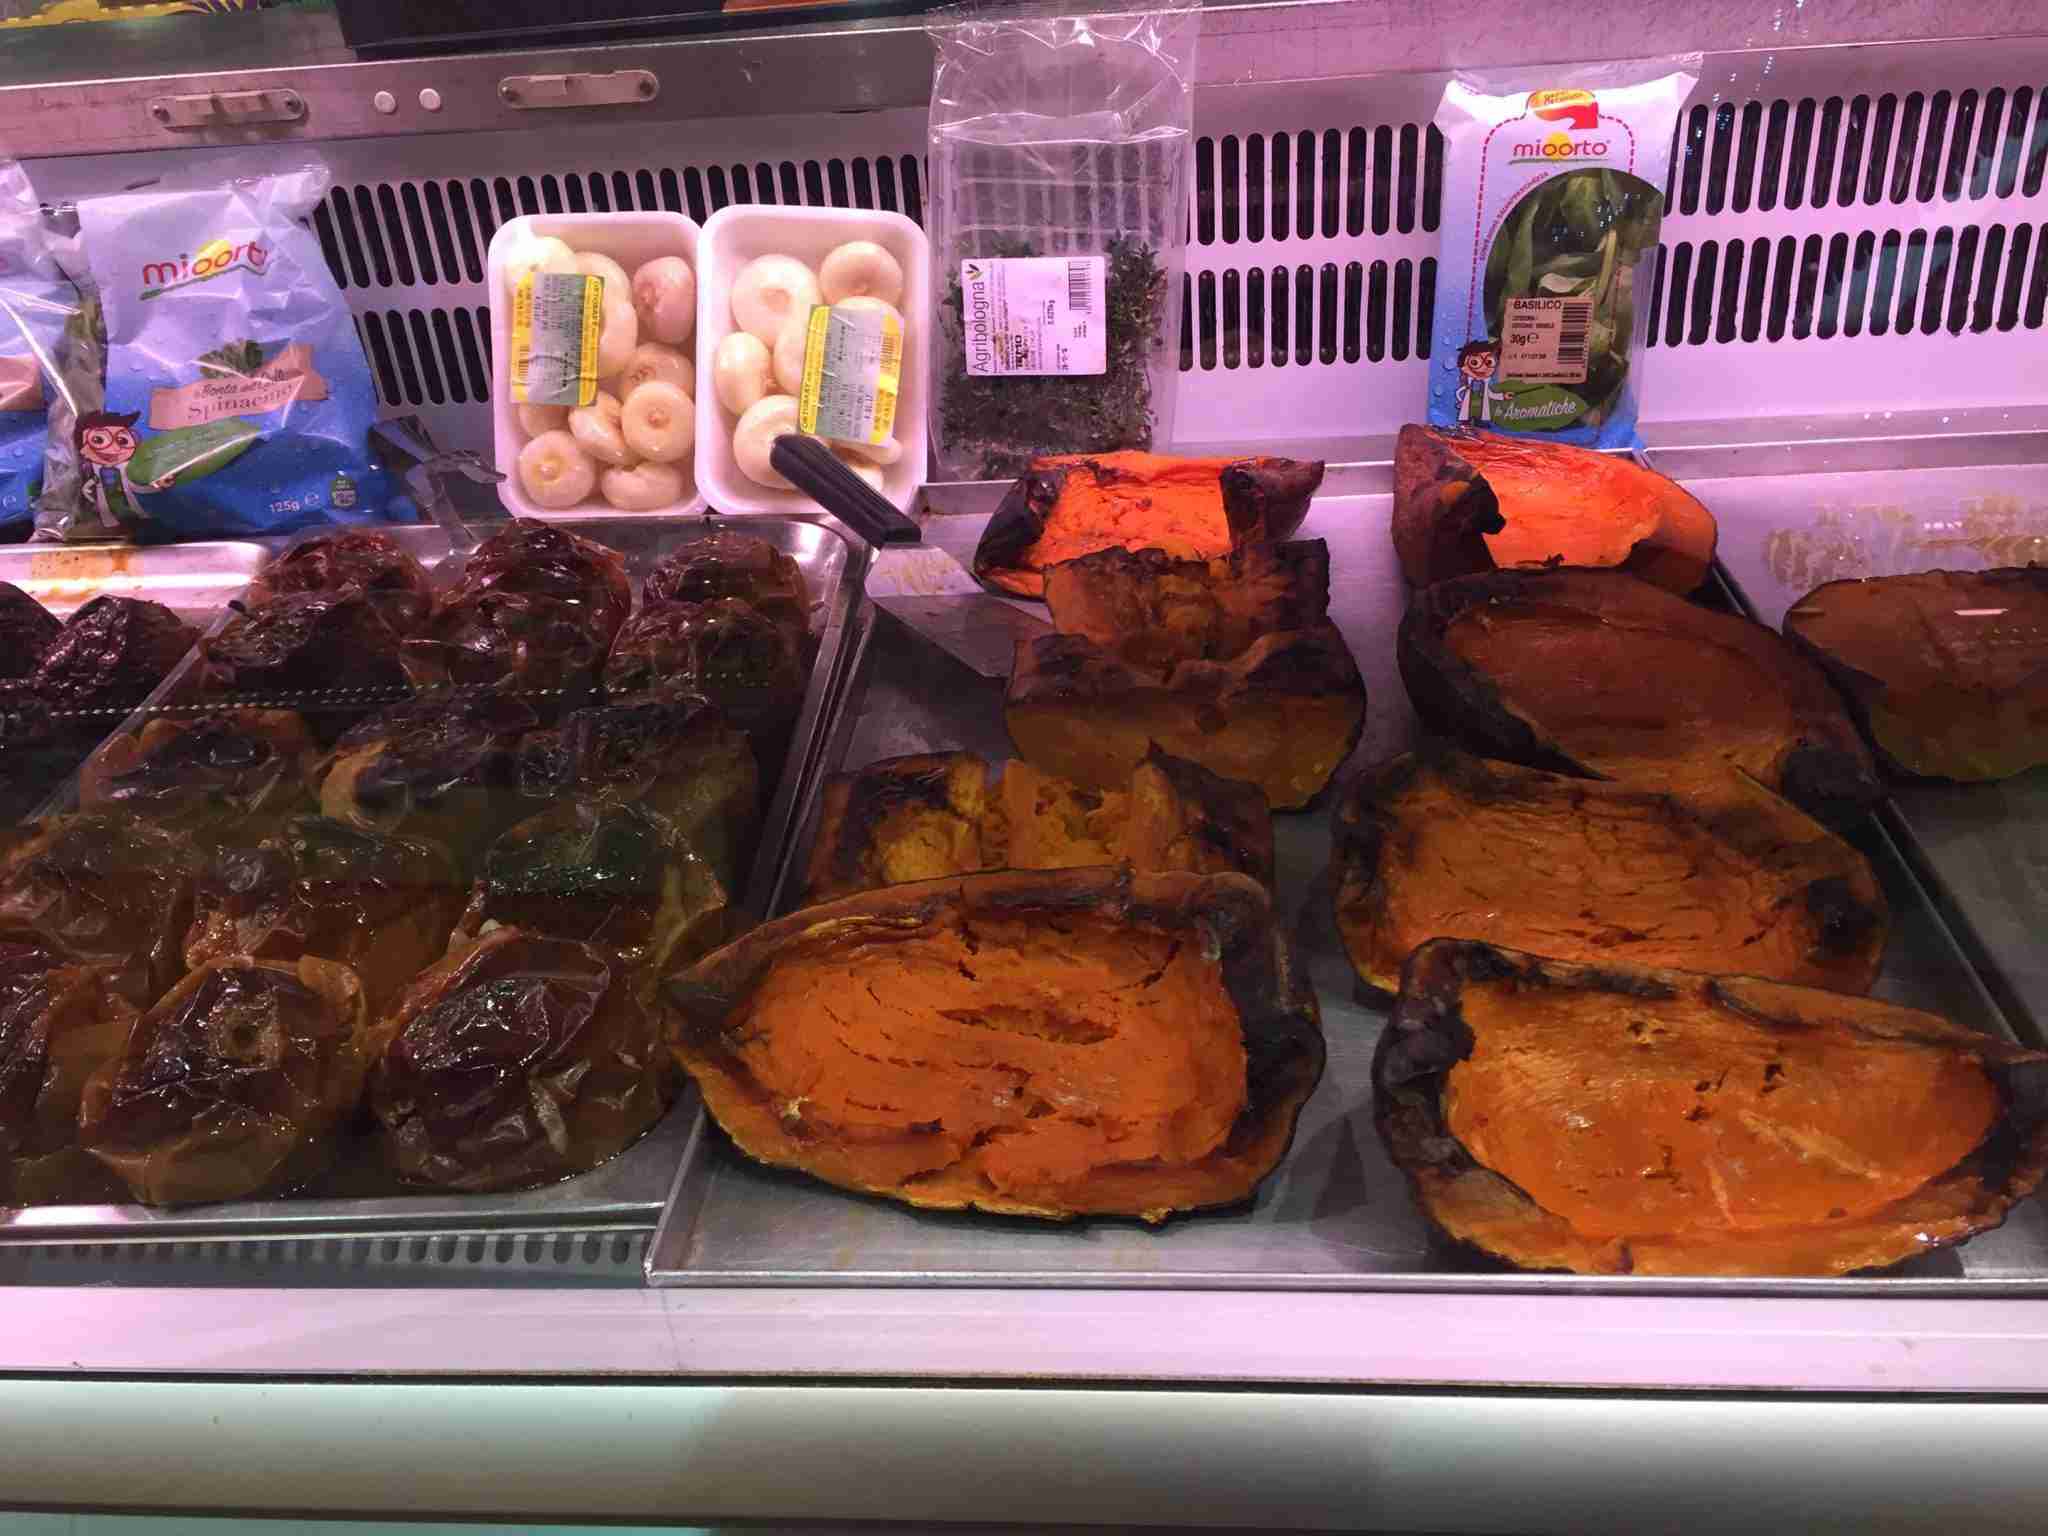 Flavors of Ferrara and Modena: Roasted pumpkin at Mercato Albinelli